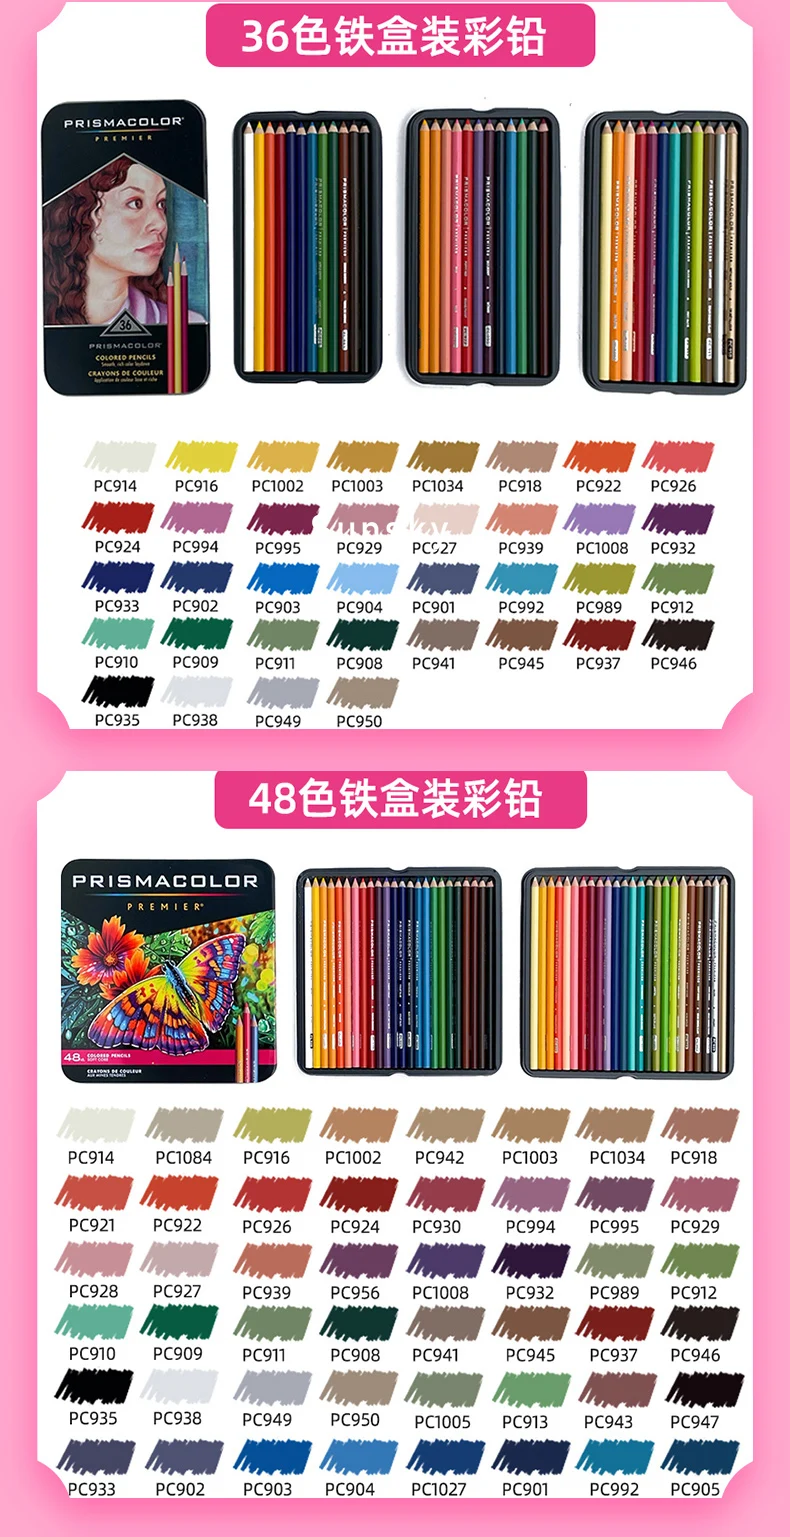 https://ae01.alicdn.com/kf/H63ccfc9073684a04ab2b79b3a9db4a00t/Original-Prismacolor-Premier-Oily-Colored-Pencils-24-48-72-132-150-color-easy-switch-between-powerful.jpg